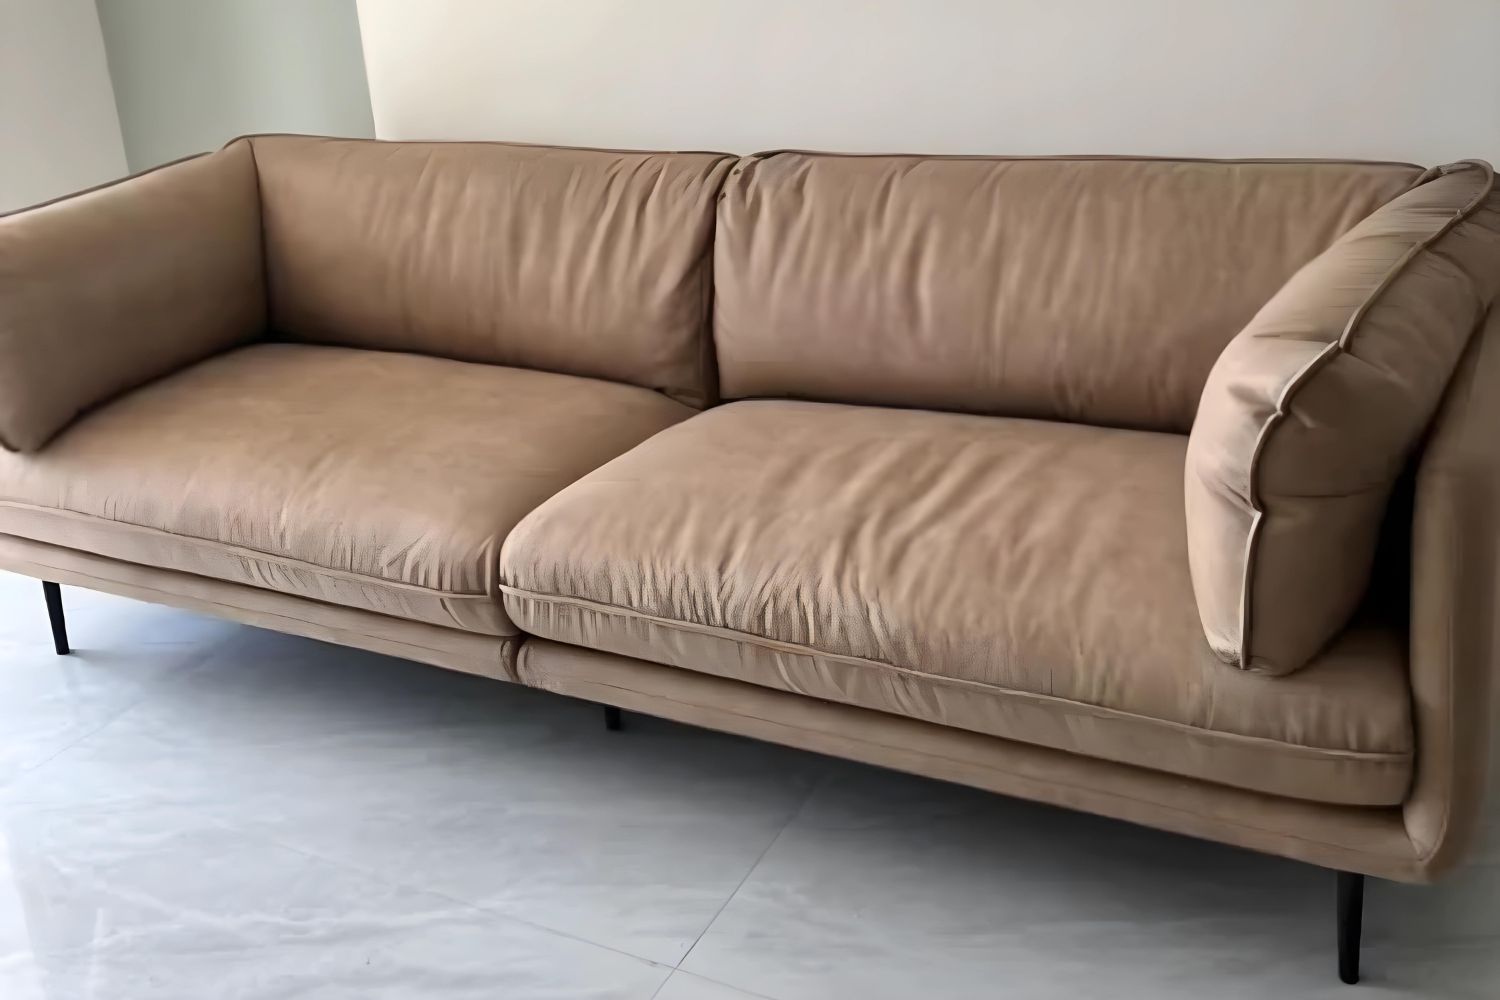 Cuddle brown fabric sofa in customer's home